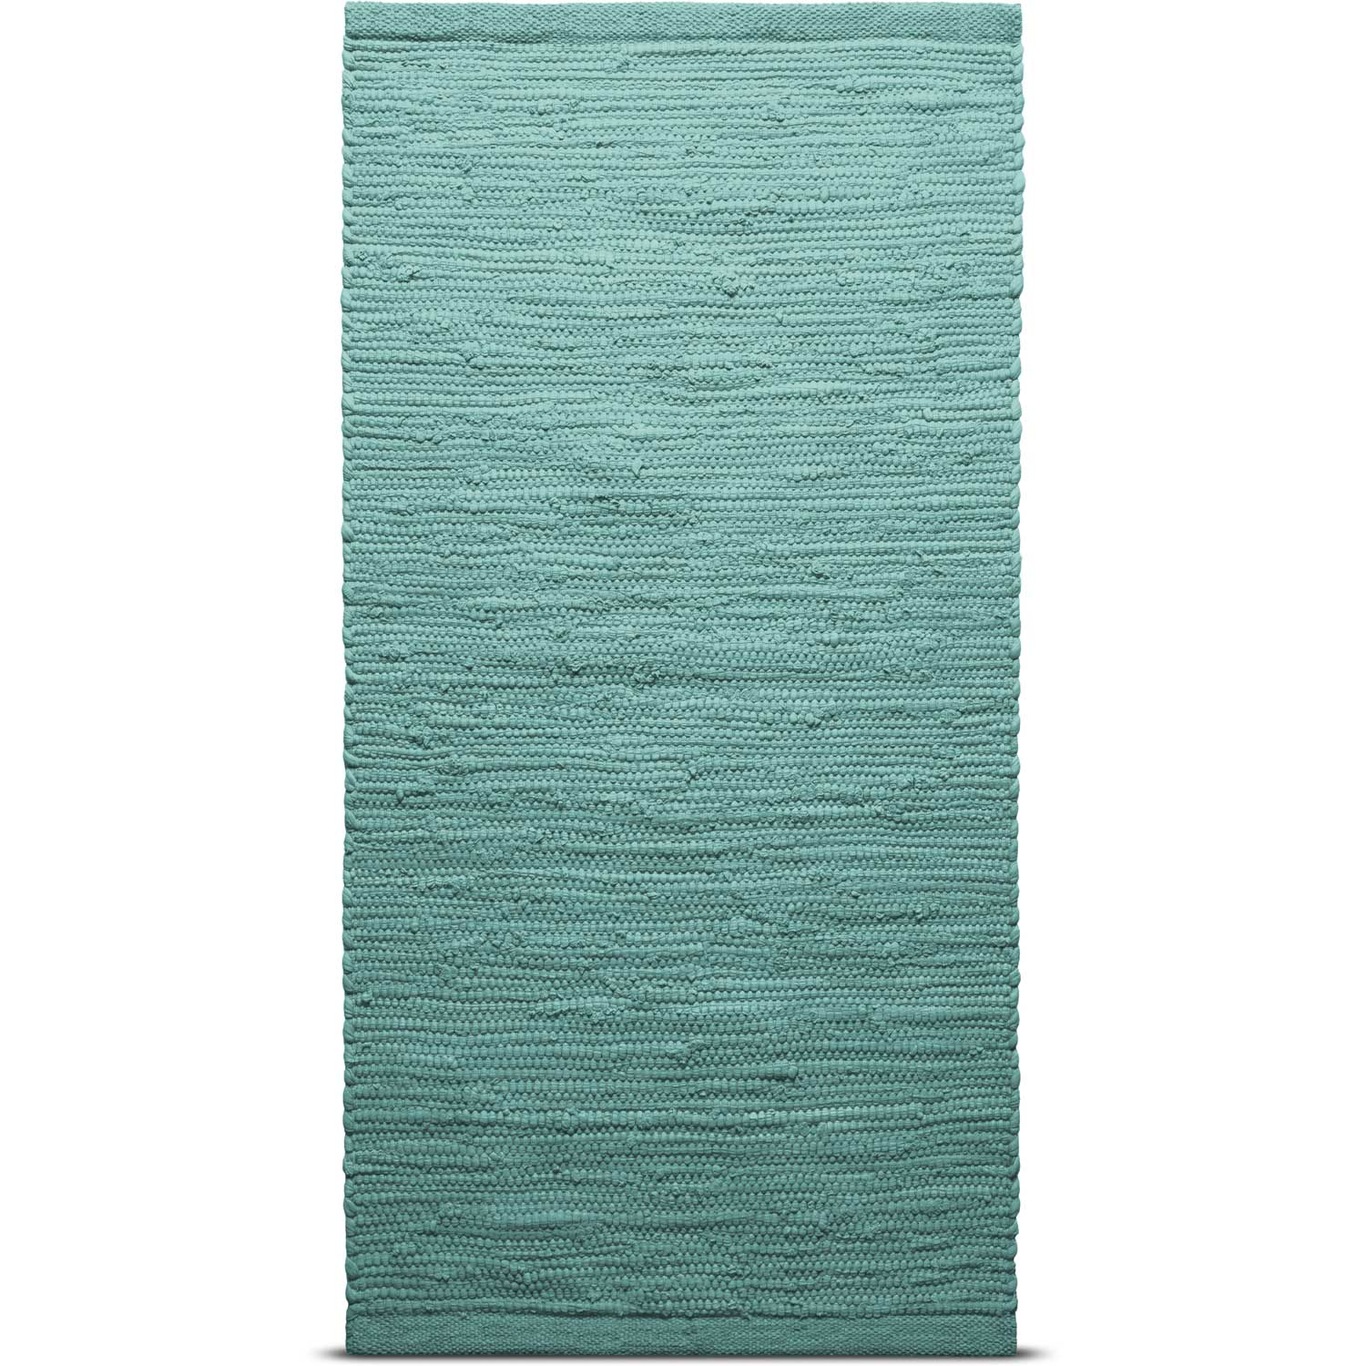 Cotton Vloerkleed Dusty Jade, 65x135 cm